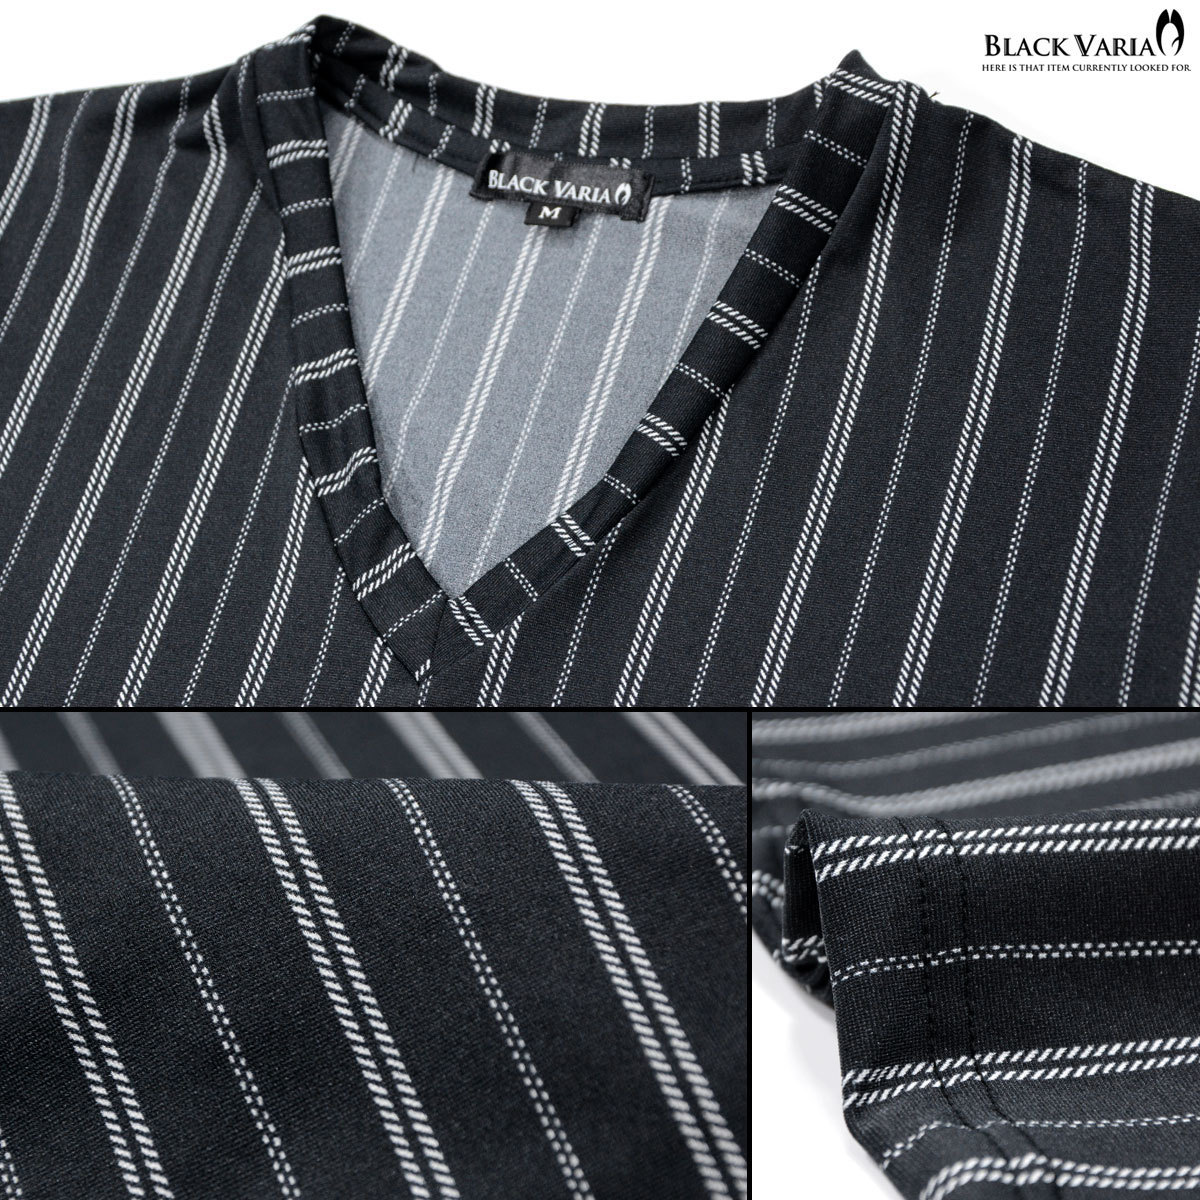 181302-bkwh ブラックバリア ストライプ ストレッチ 半袖 Vネック Tシャツ 日本製 細身 メンズ(ブラック黒ホワイト白) XL 総柄 スリム_画像4